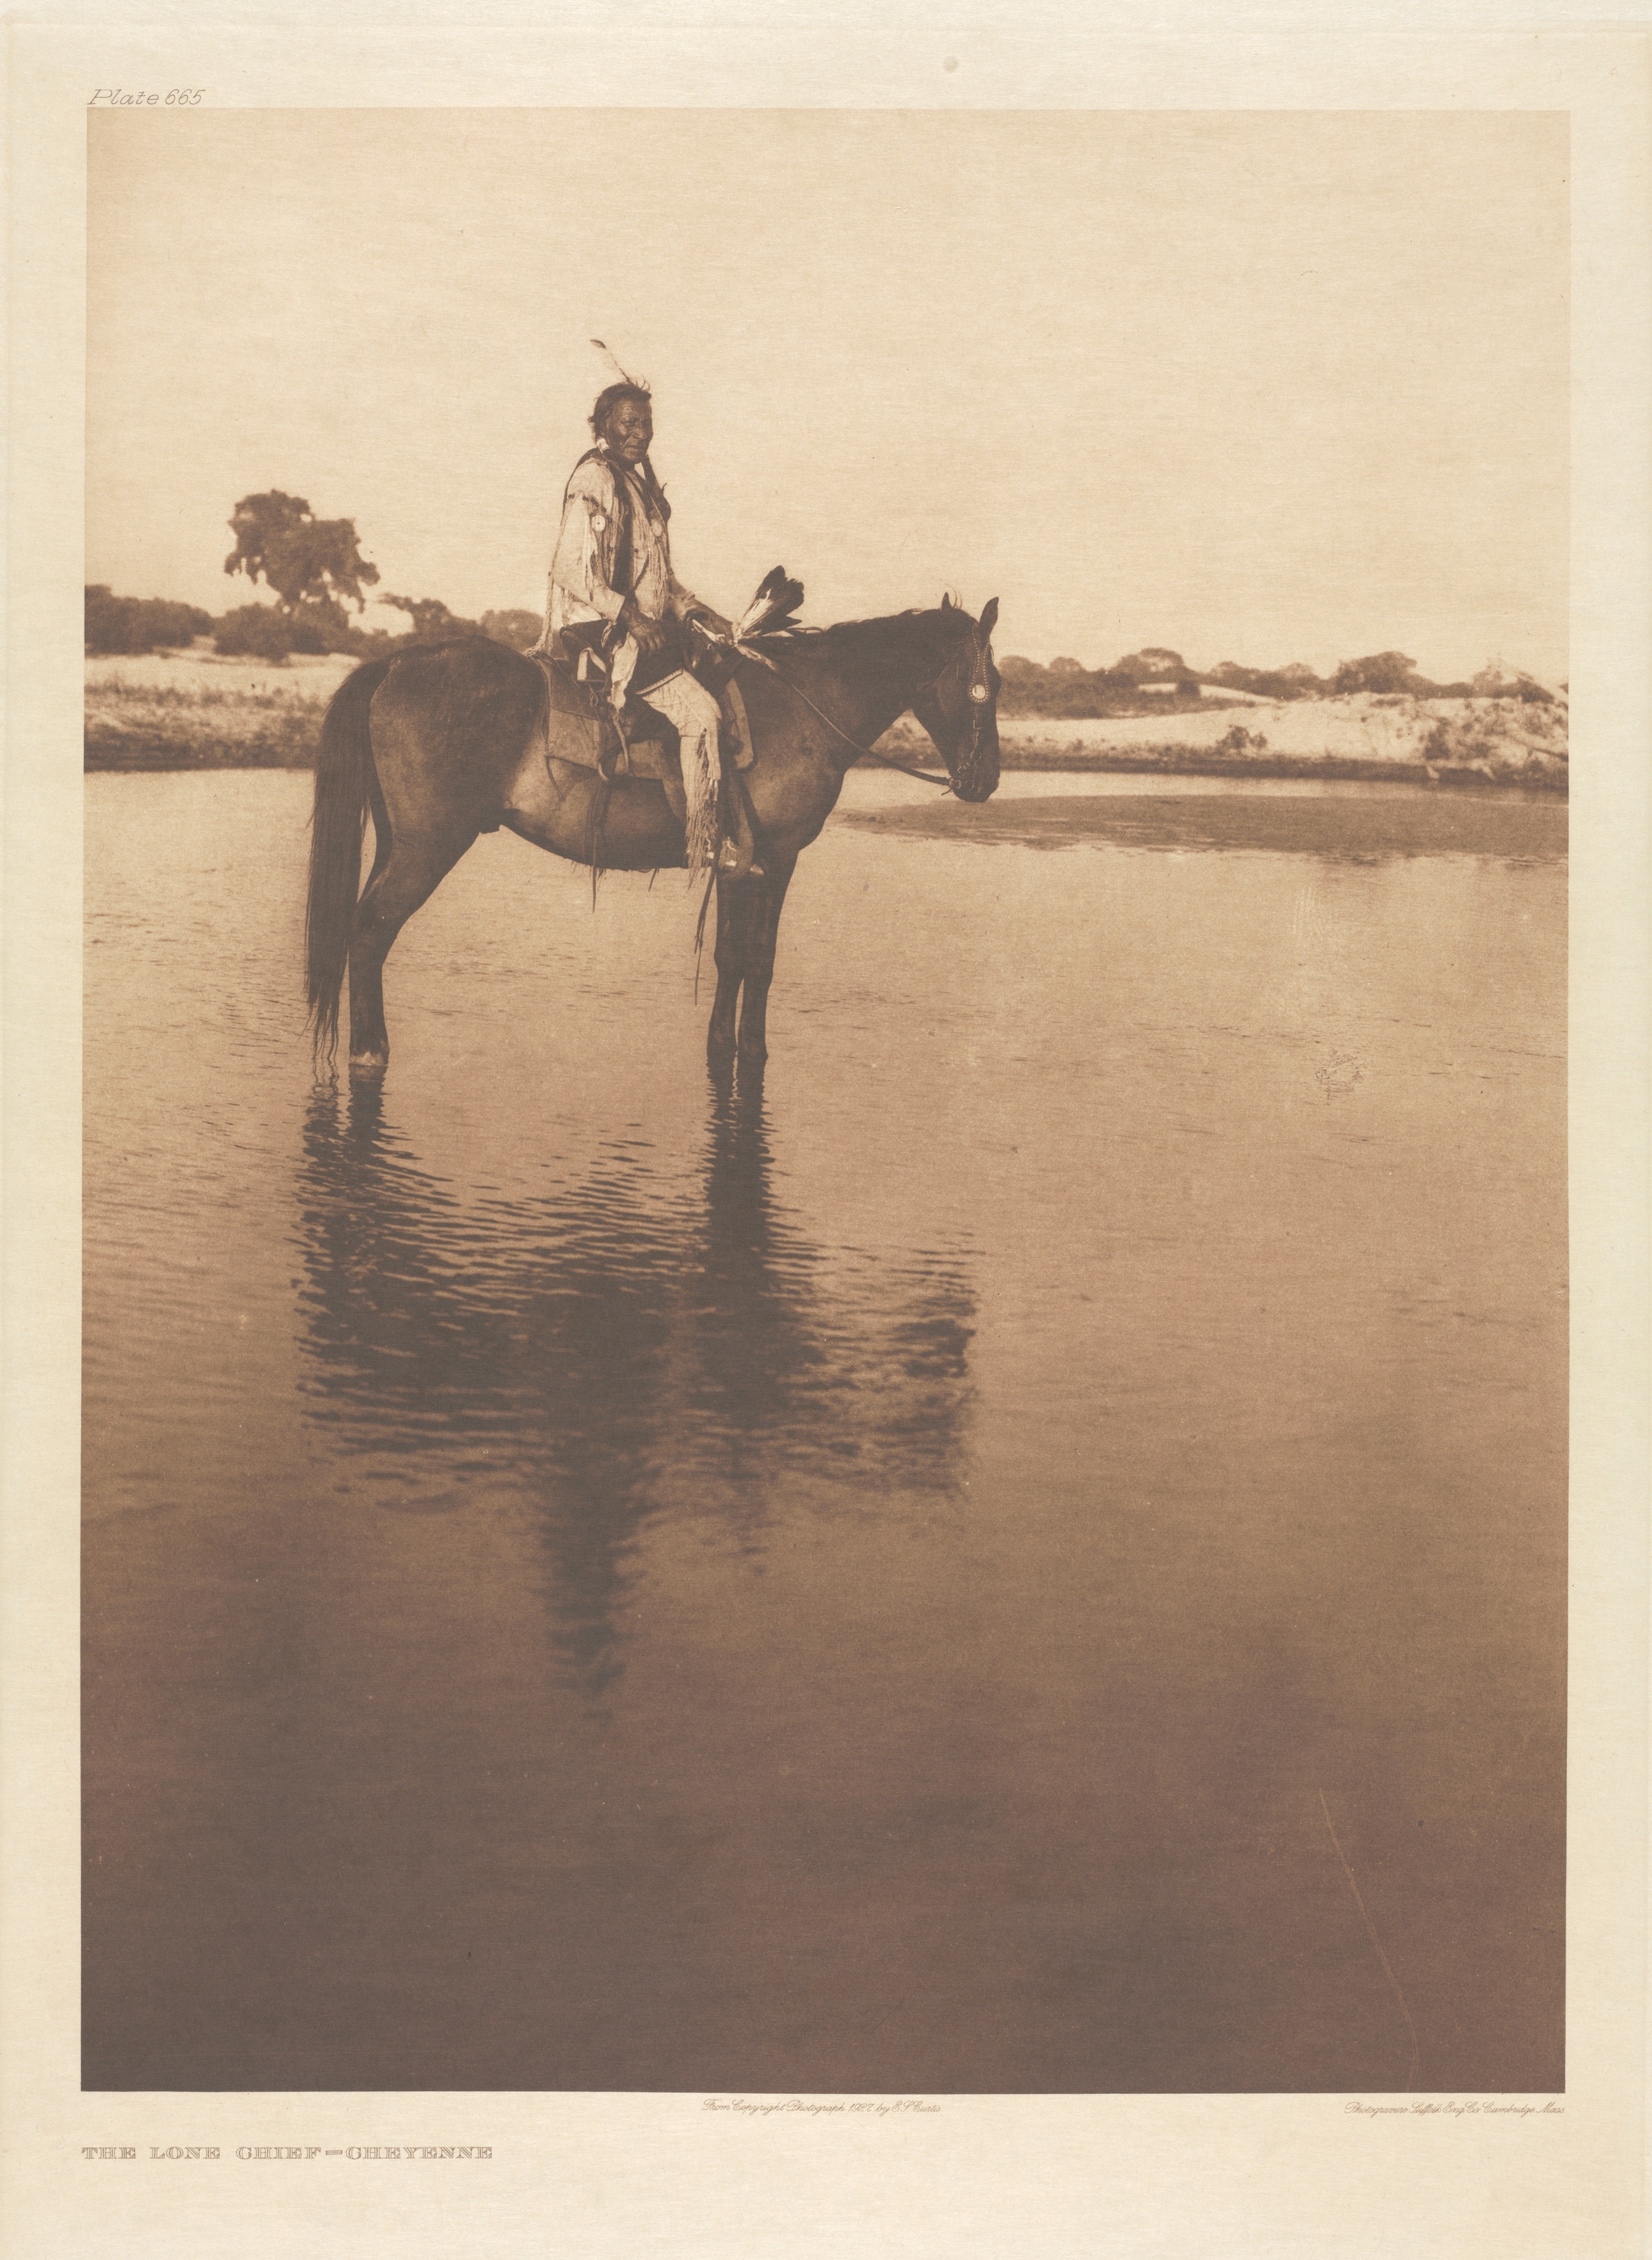 Portfolio XIX, Plate 665: The Lone Chief - Cheyenne